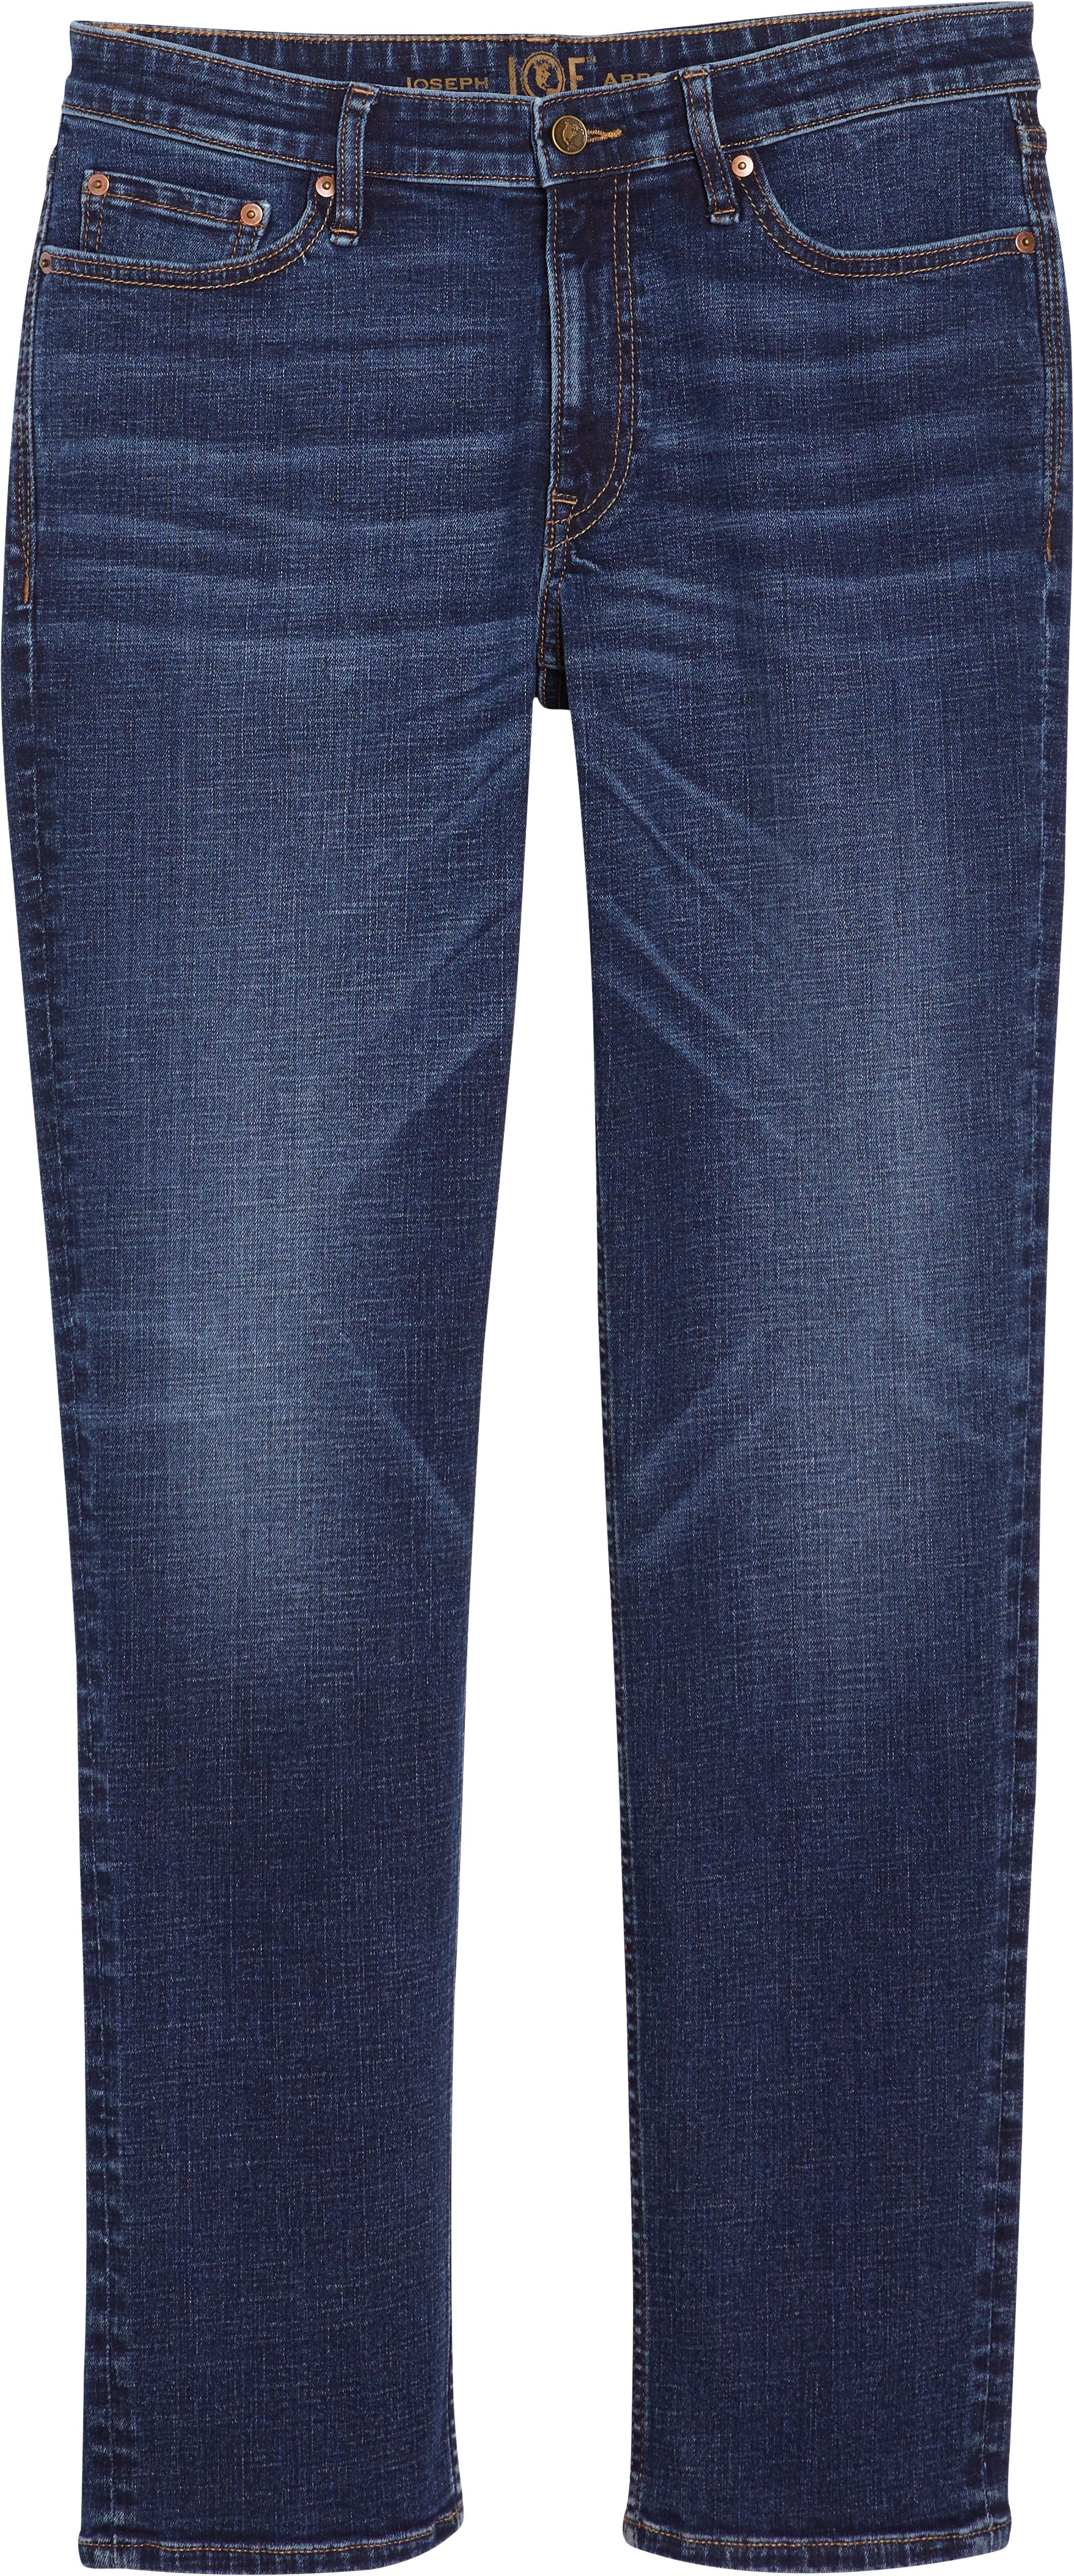 JOE Joseph Abboud Conan Dark Blue Wash Slim Fit Jeans - Men's Pants ...